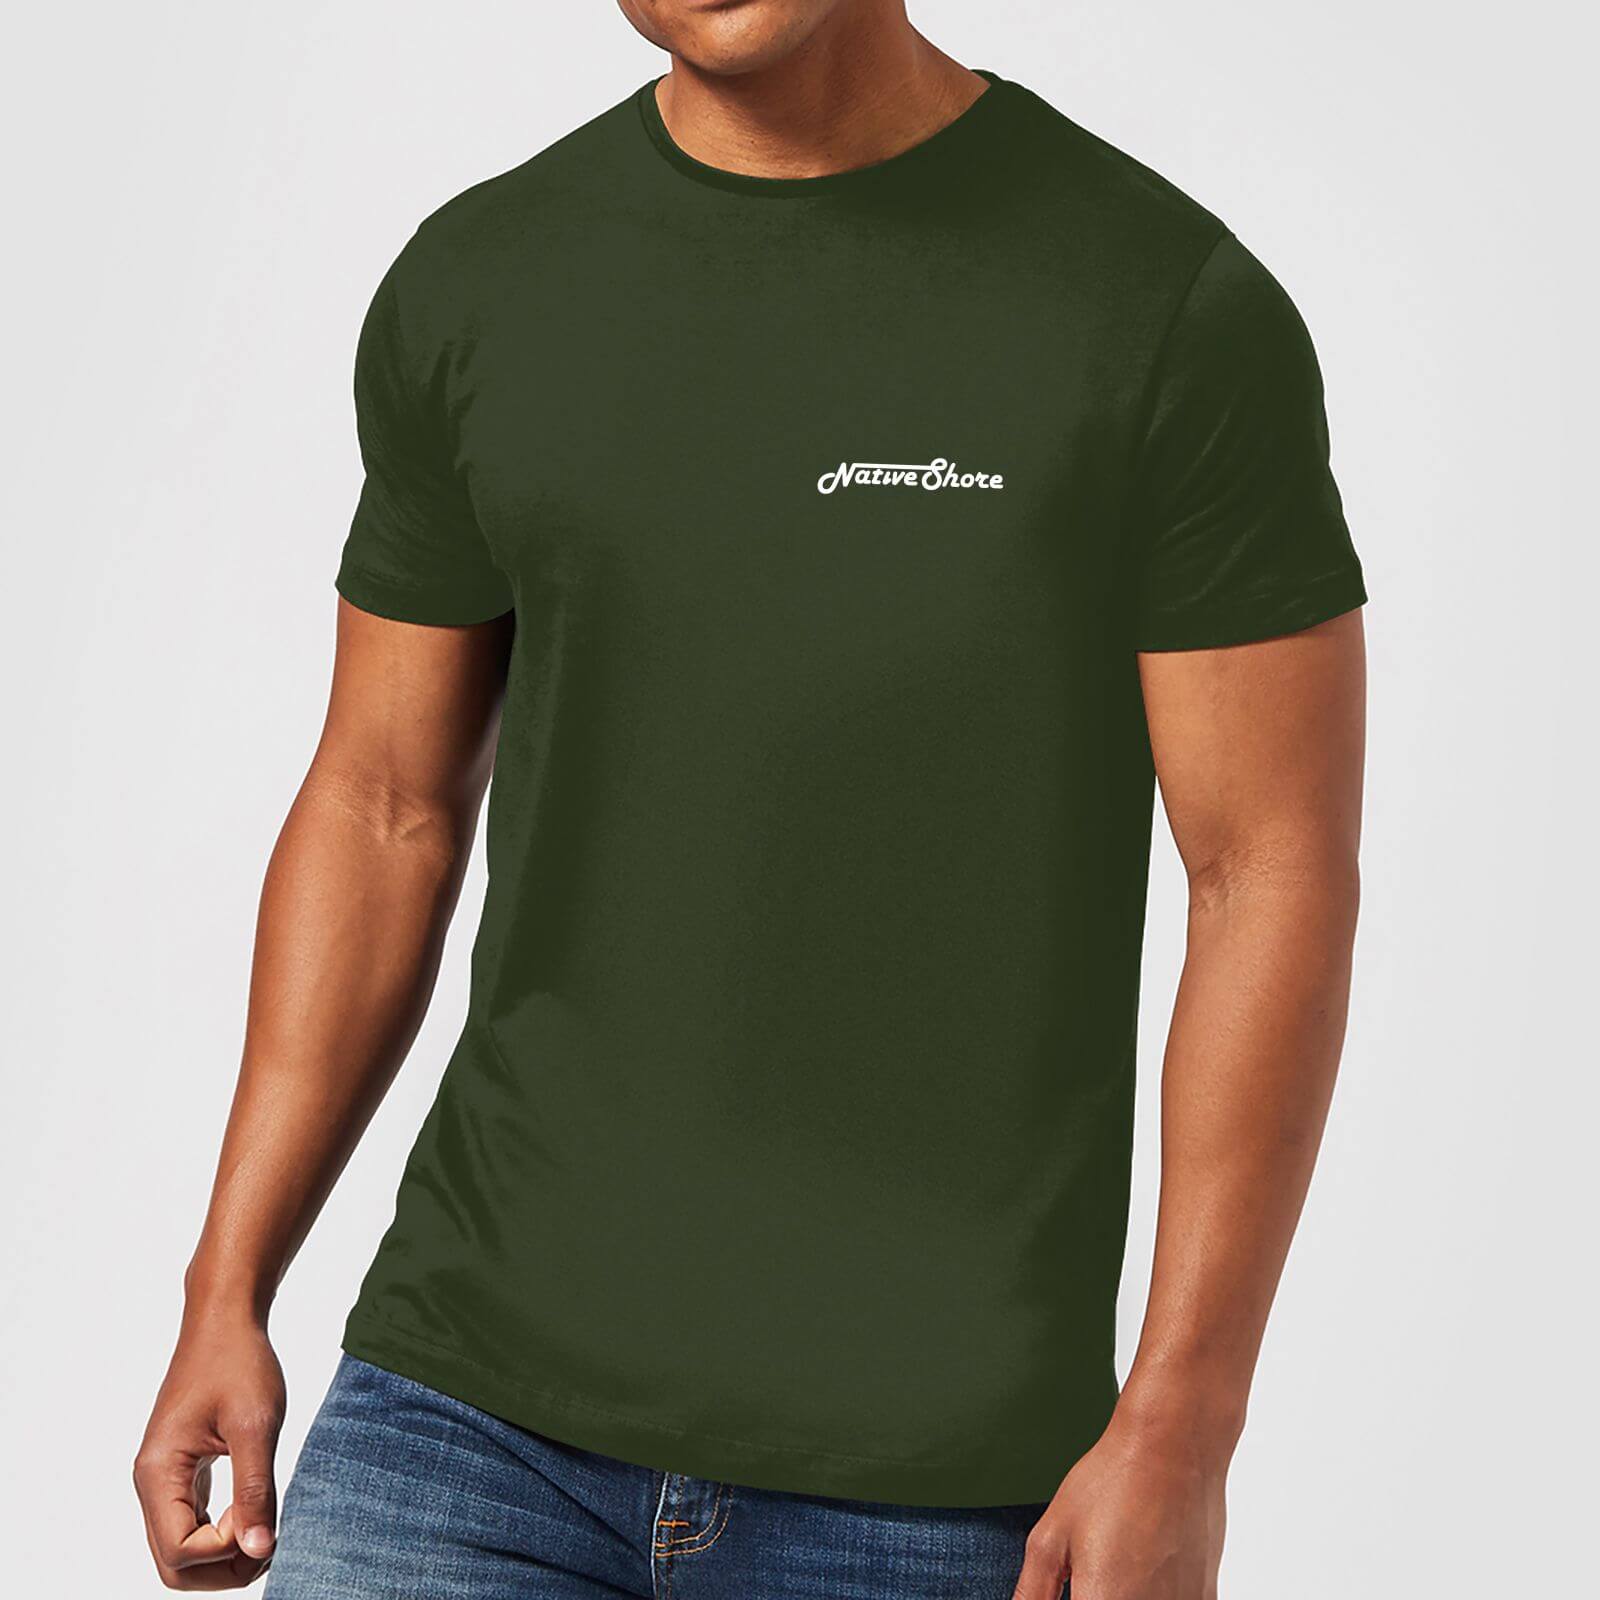 Native Shore Men's Original Shore T-Shirt - Forest Green - M - Forest Green